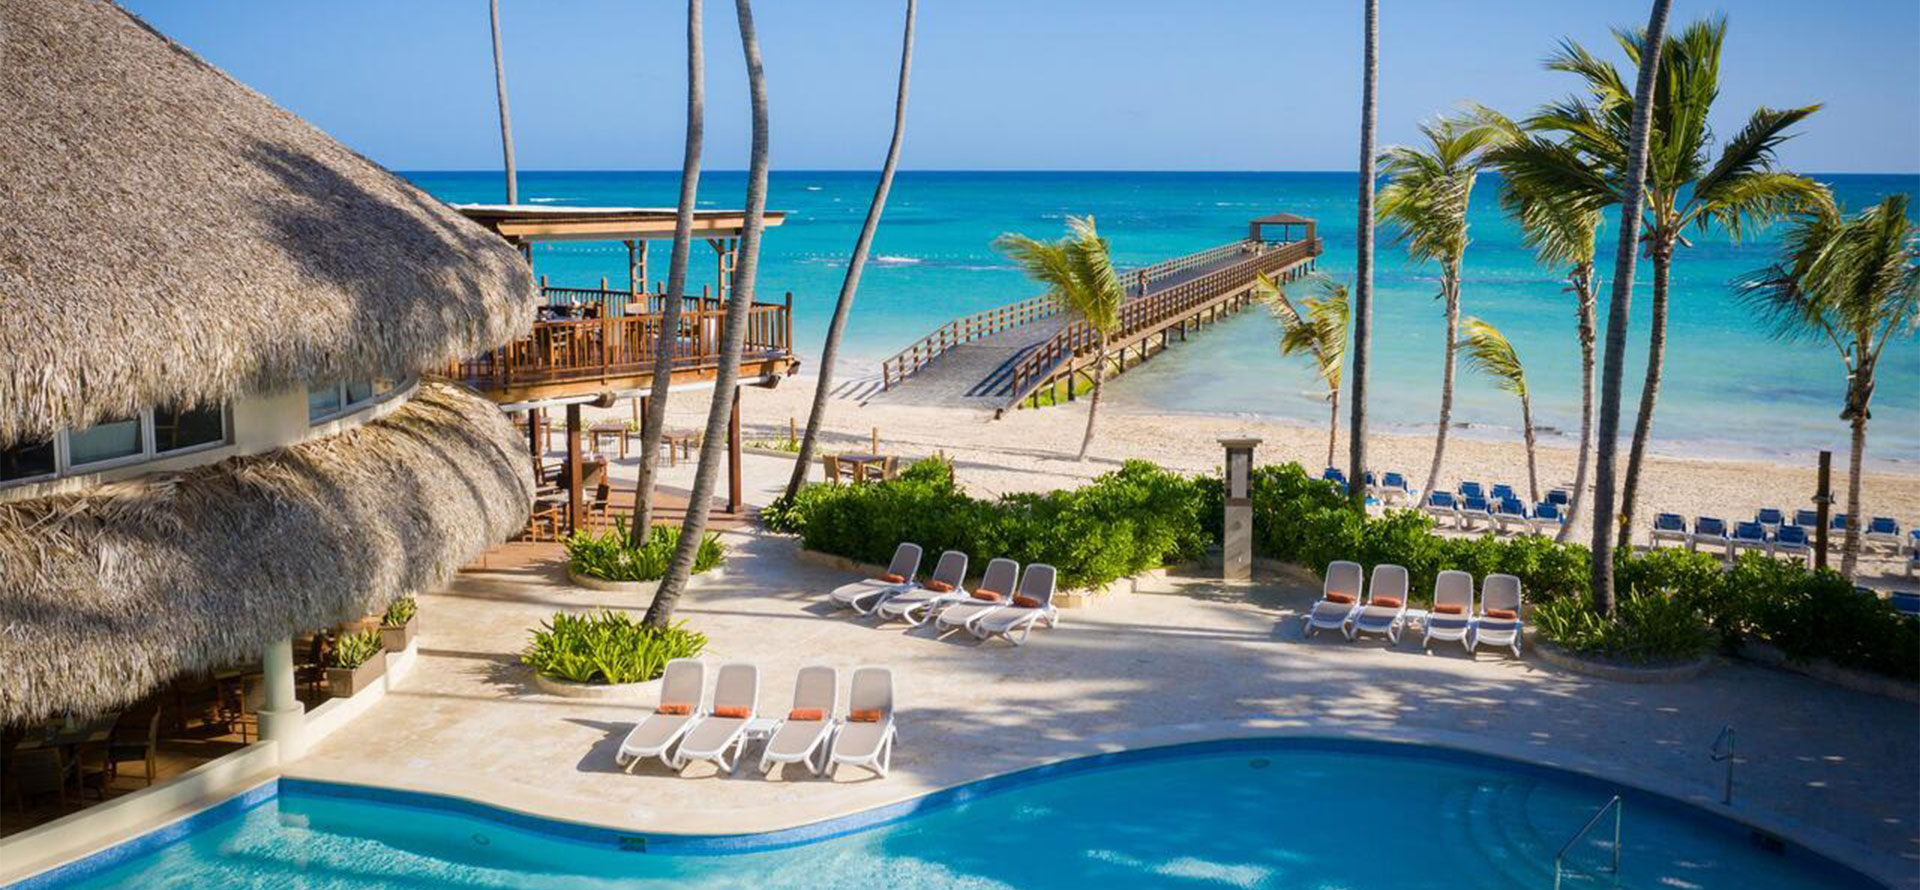 Beautiful resort in Dominican Republic.